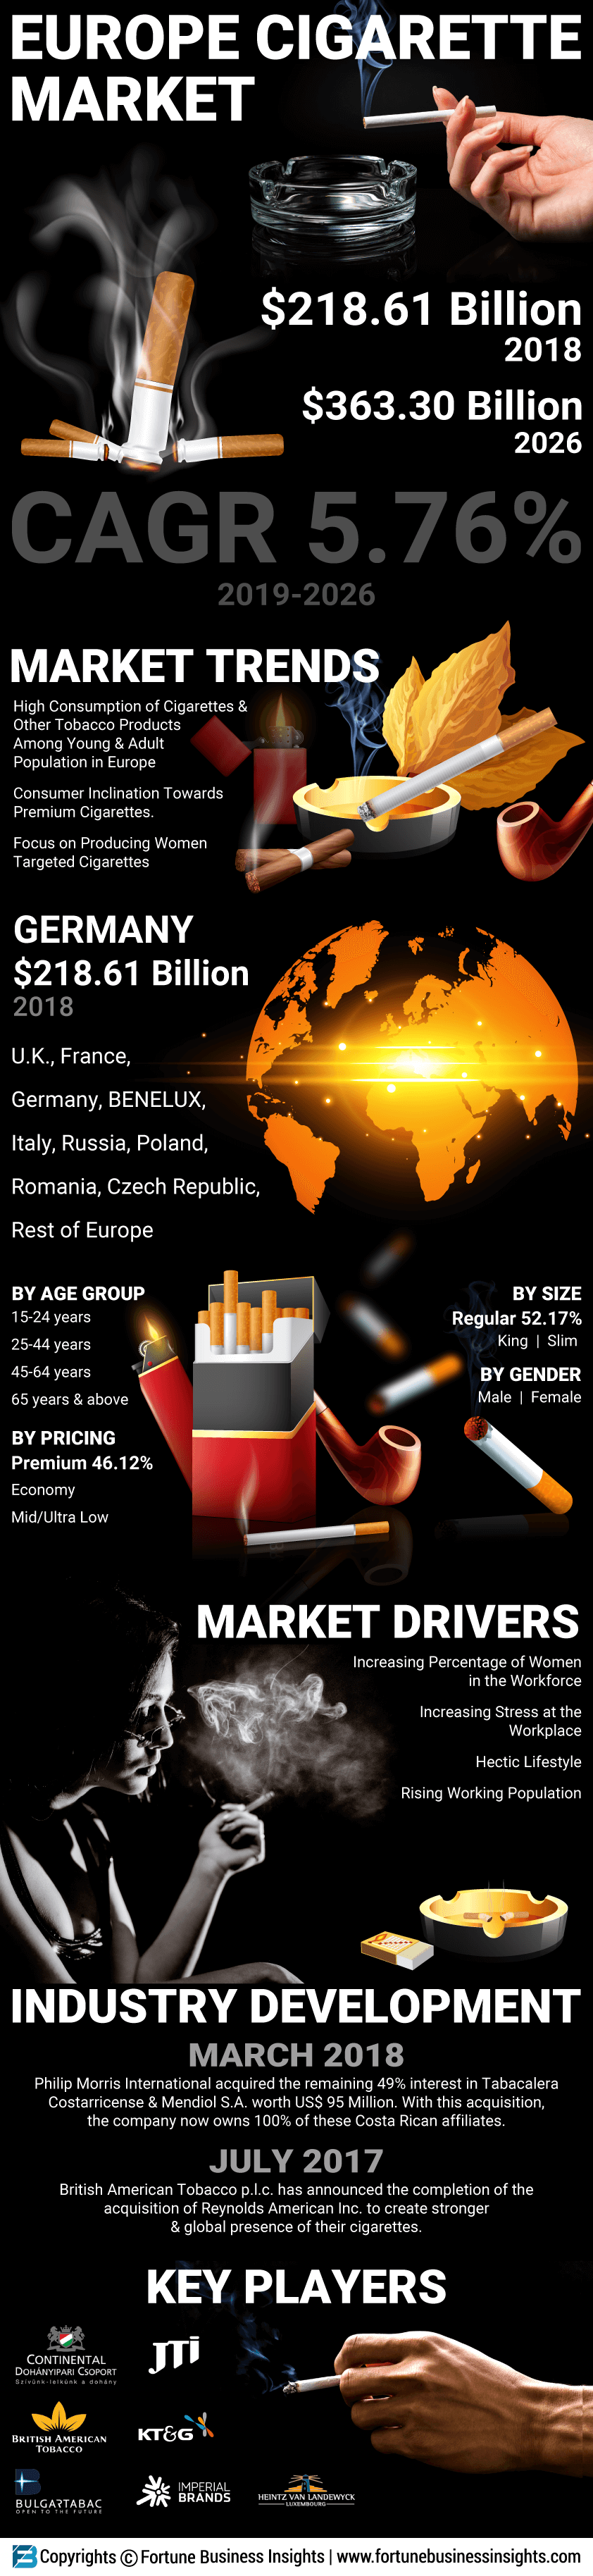 Europe Cigarette Market